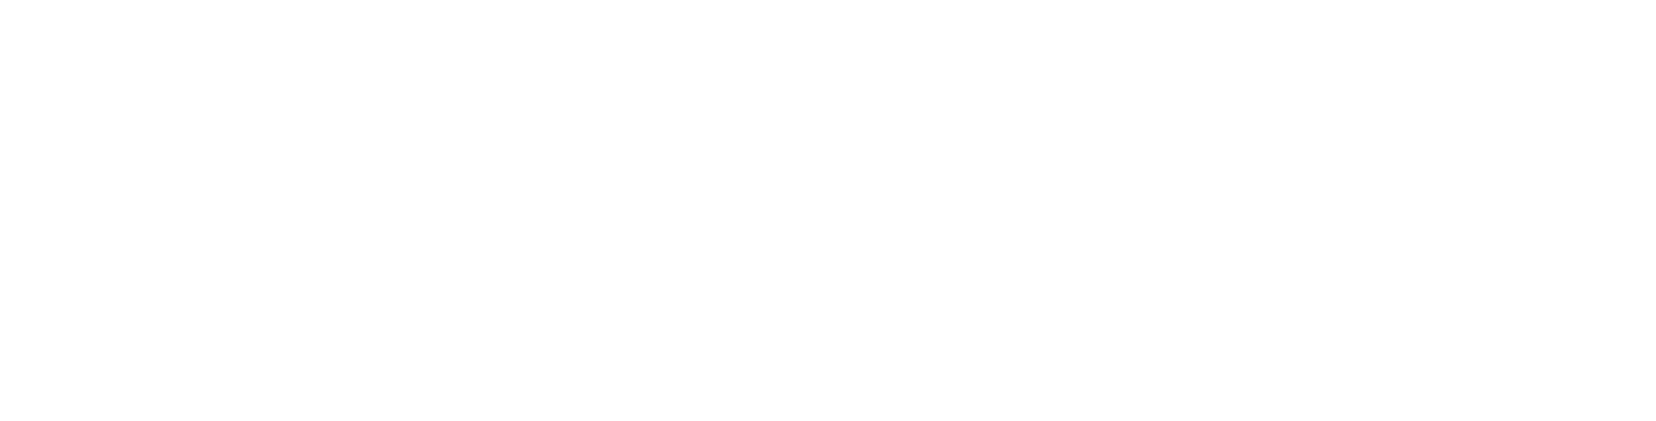 Chongqing Changan Logo groß für dunkle Hintergründe (transparentes PNG)